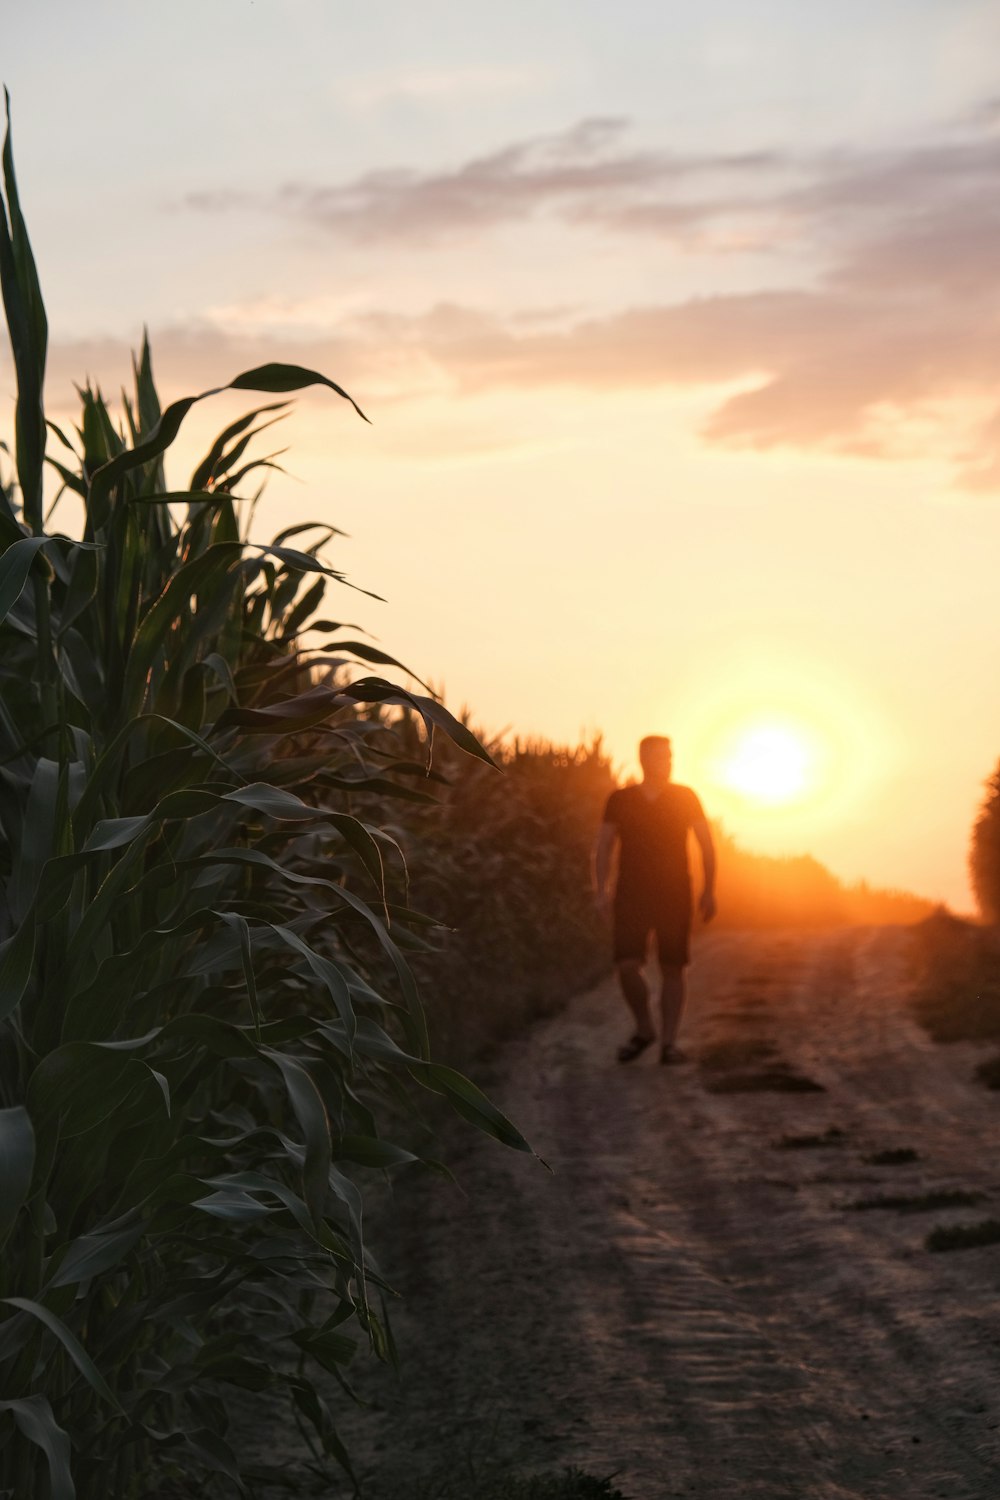 a man walking down a dirt road at sunset